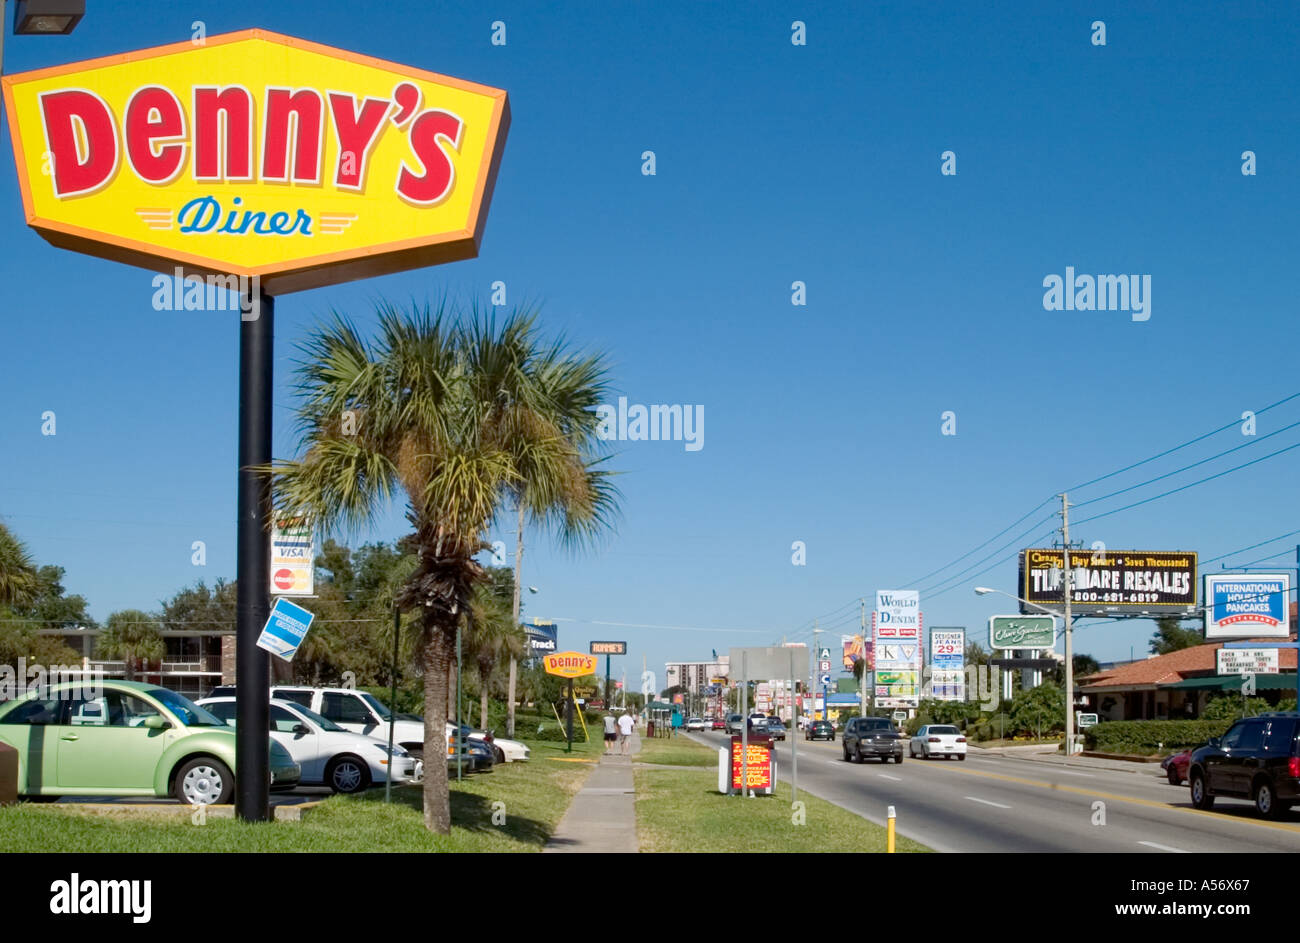 Denny's Diner, International Drive, Orlando, Florida, USA Banque D'Images